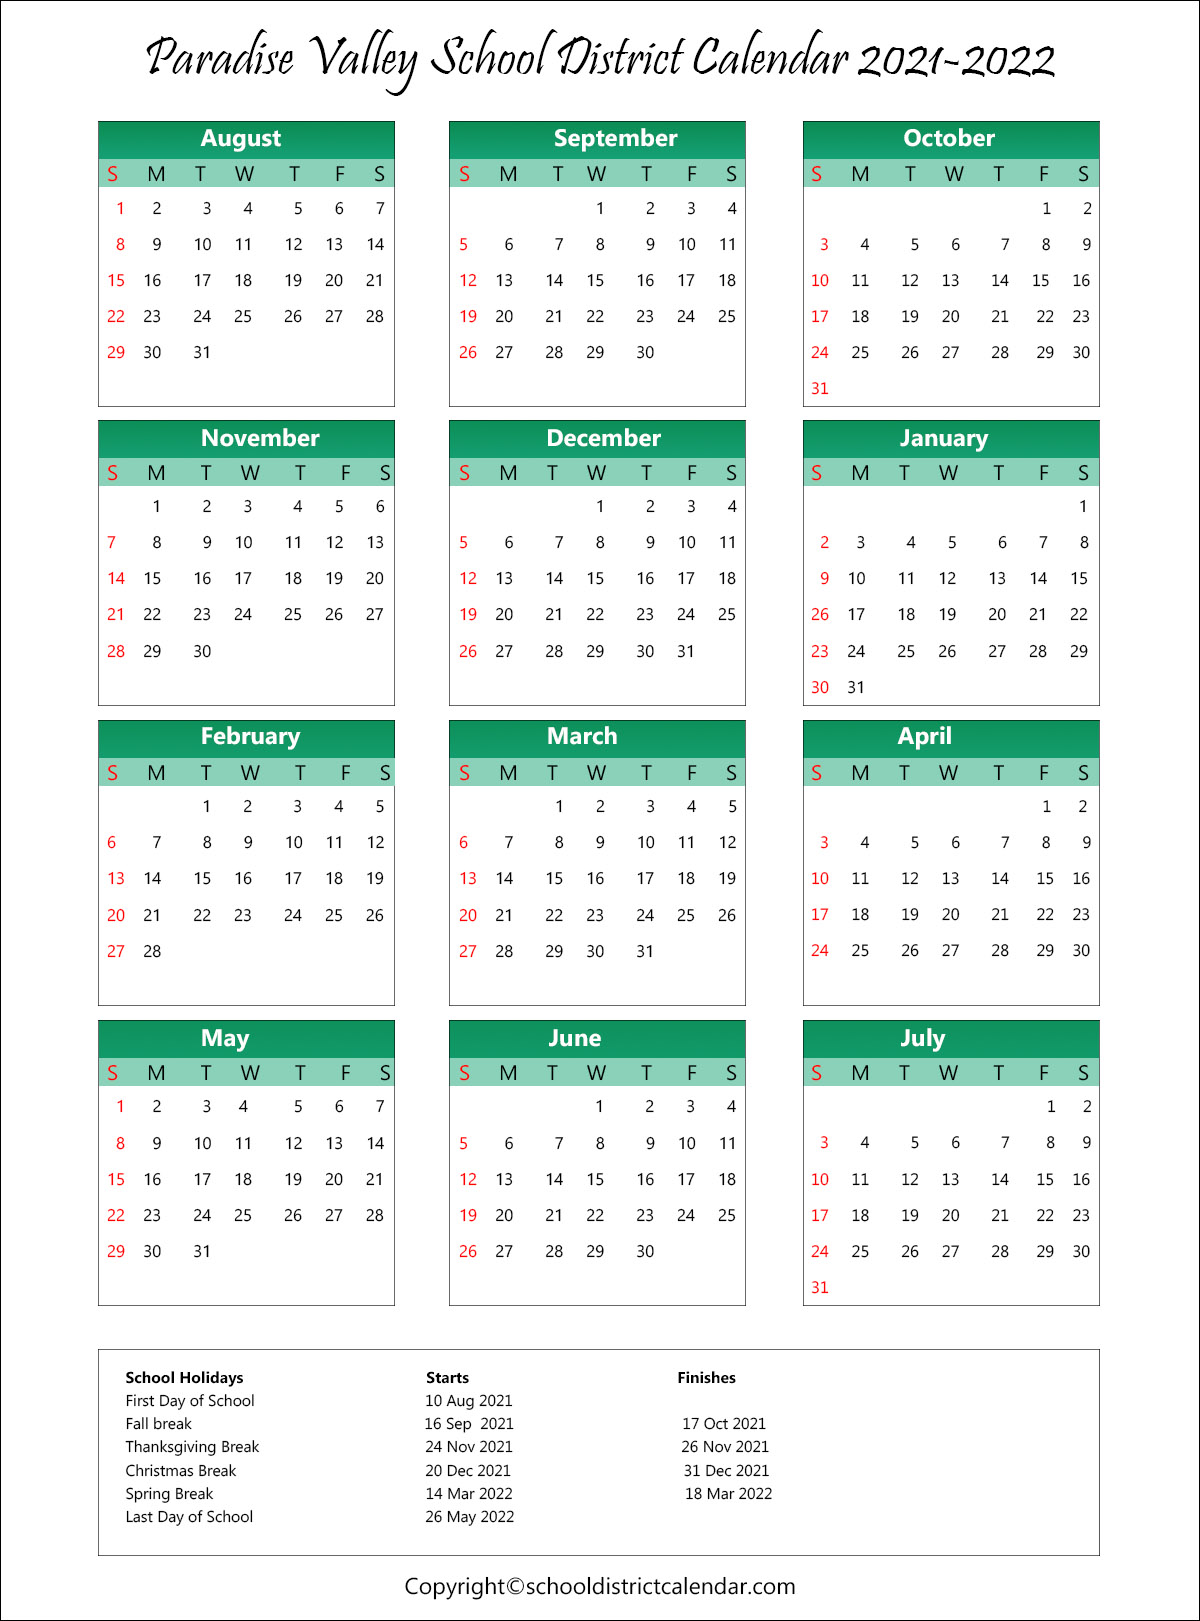 Paradise Valley Unified School District, Arizona Calendar Holidays 2021